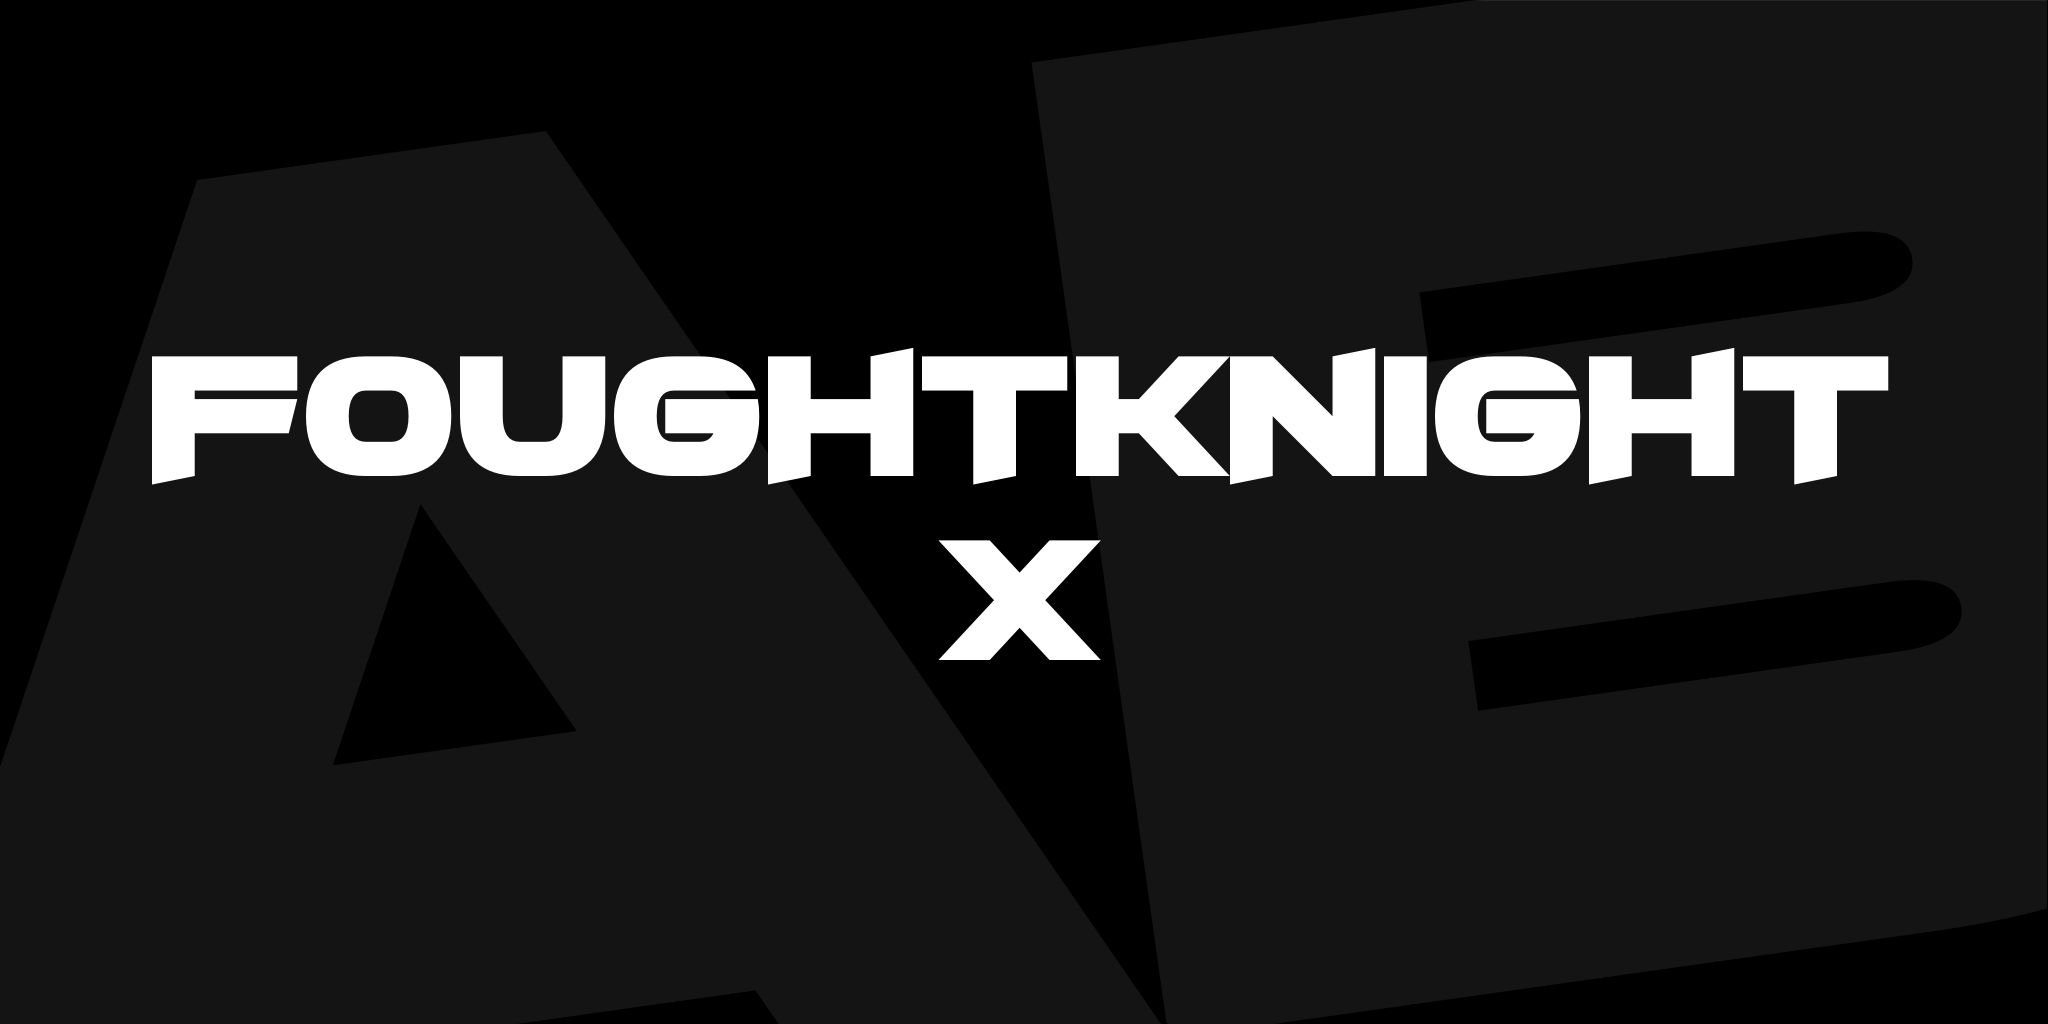 Fought Knight X